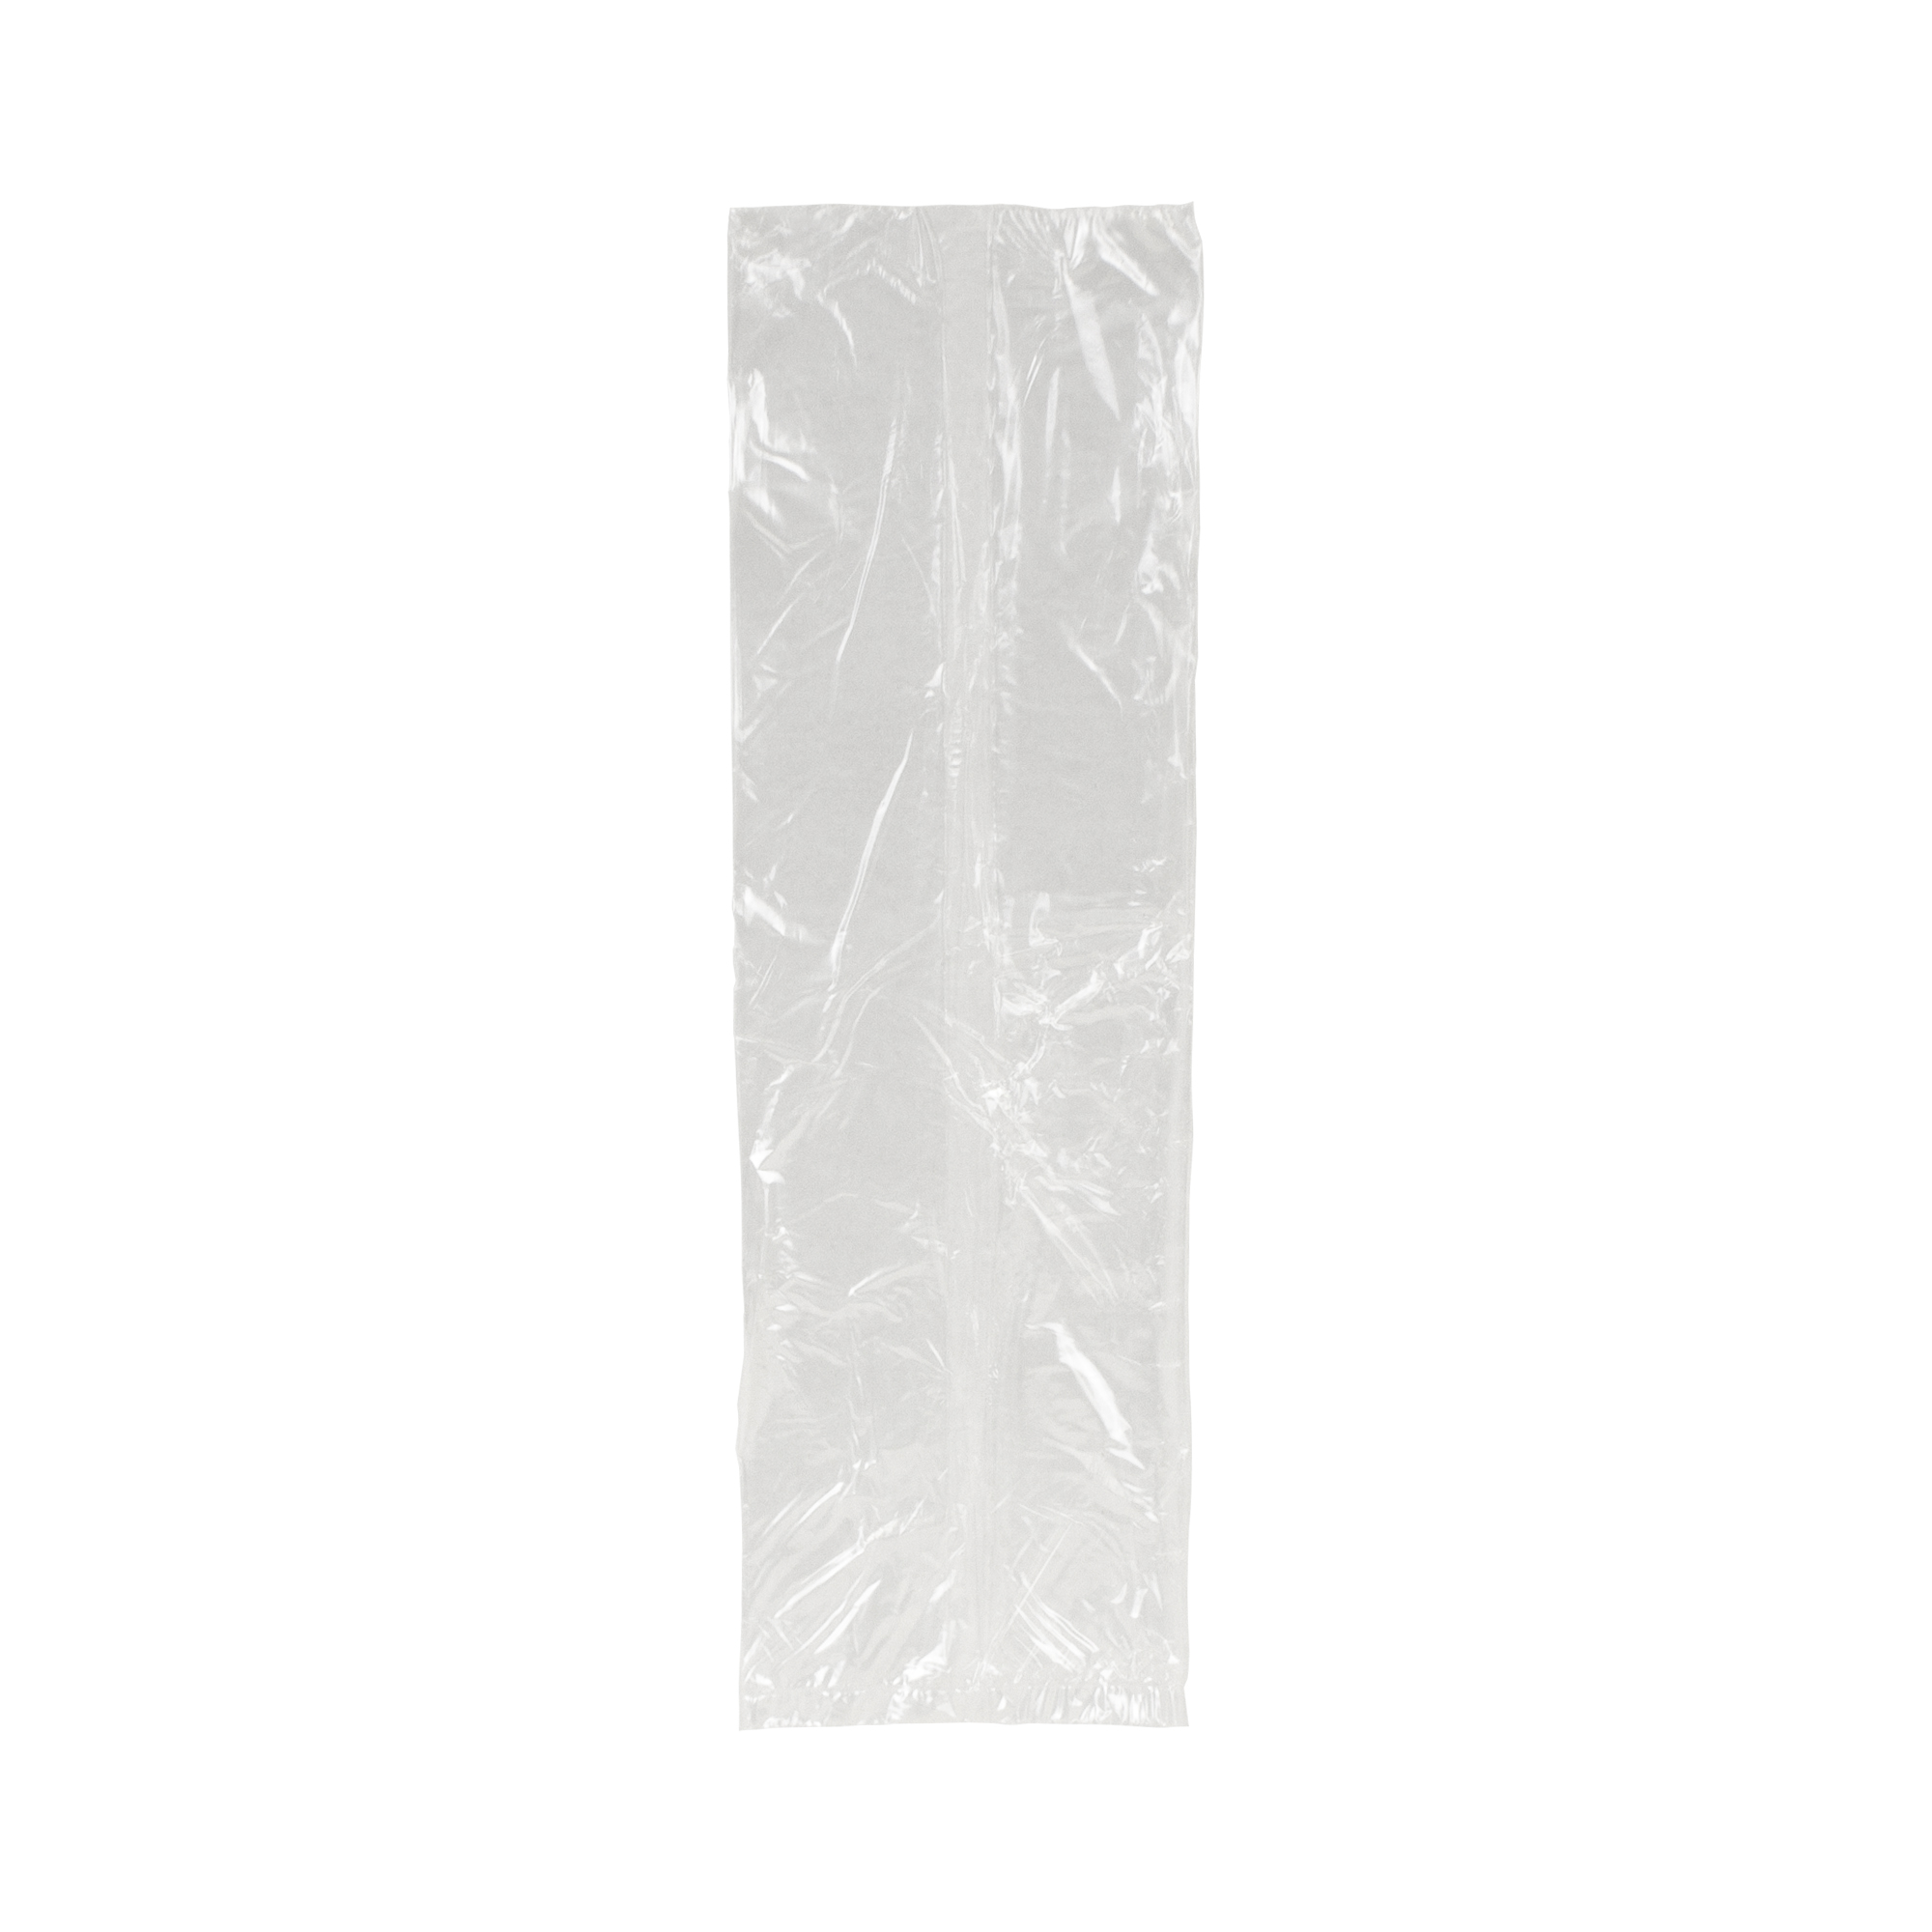 Zipgards® Low Density Disposable Reclosable Bags – Quart Size